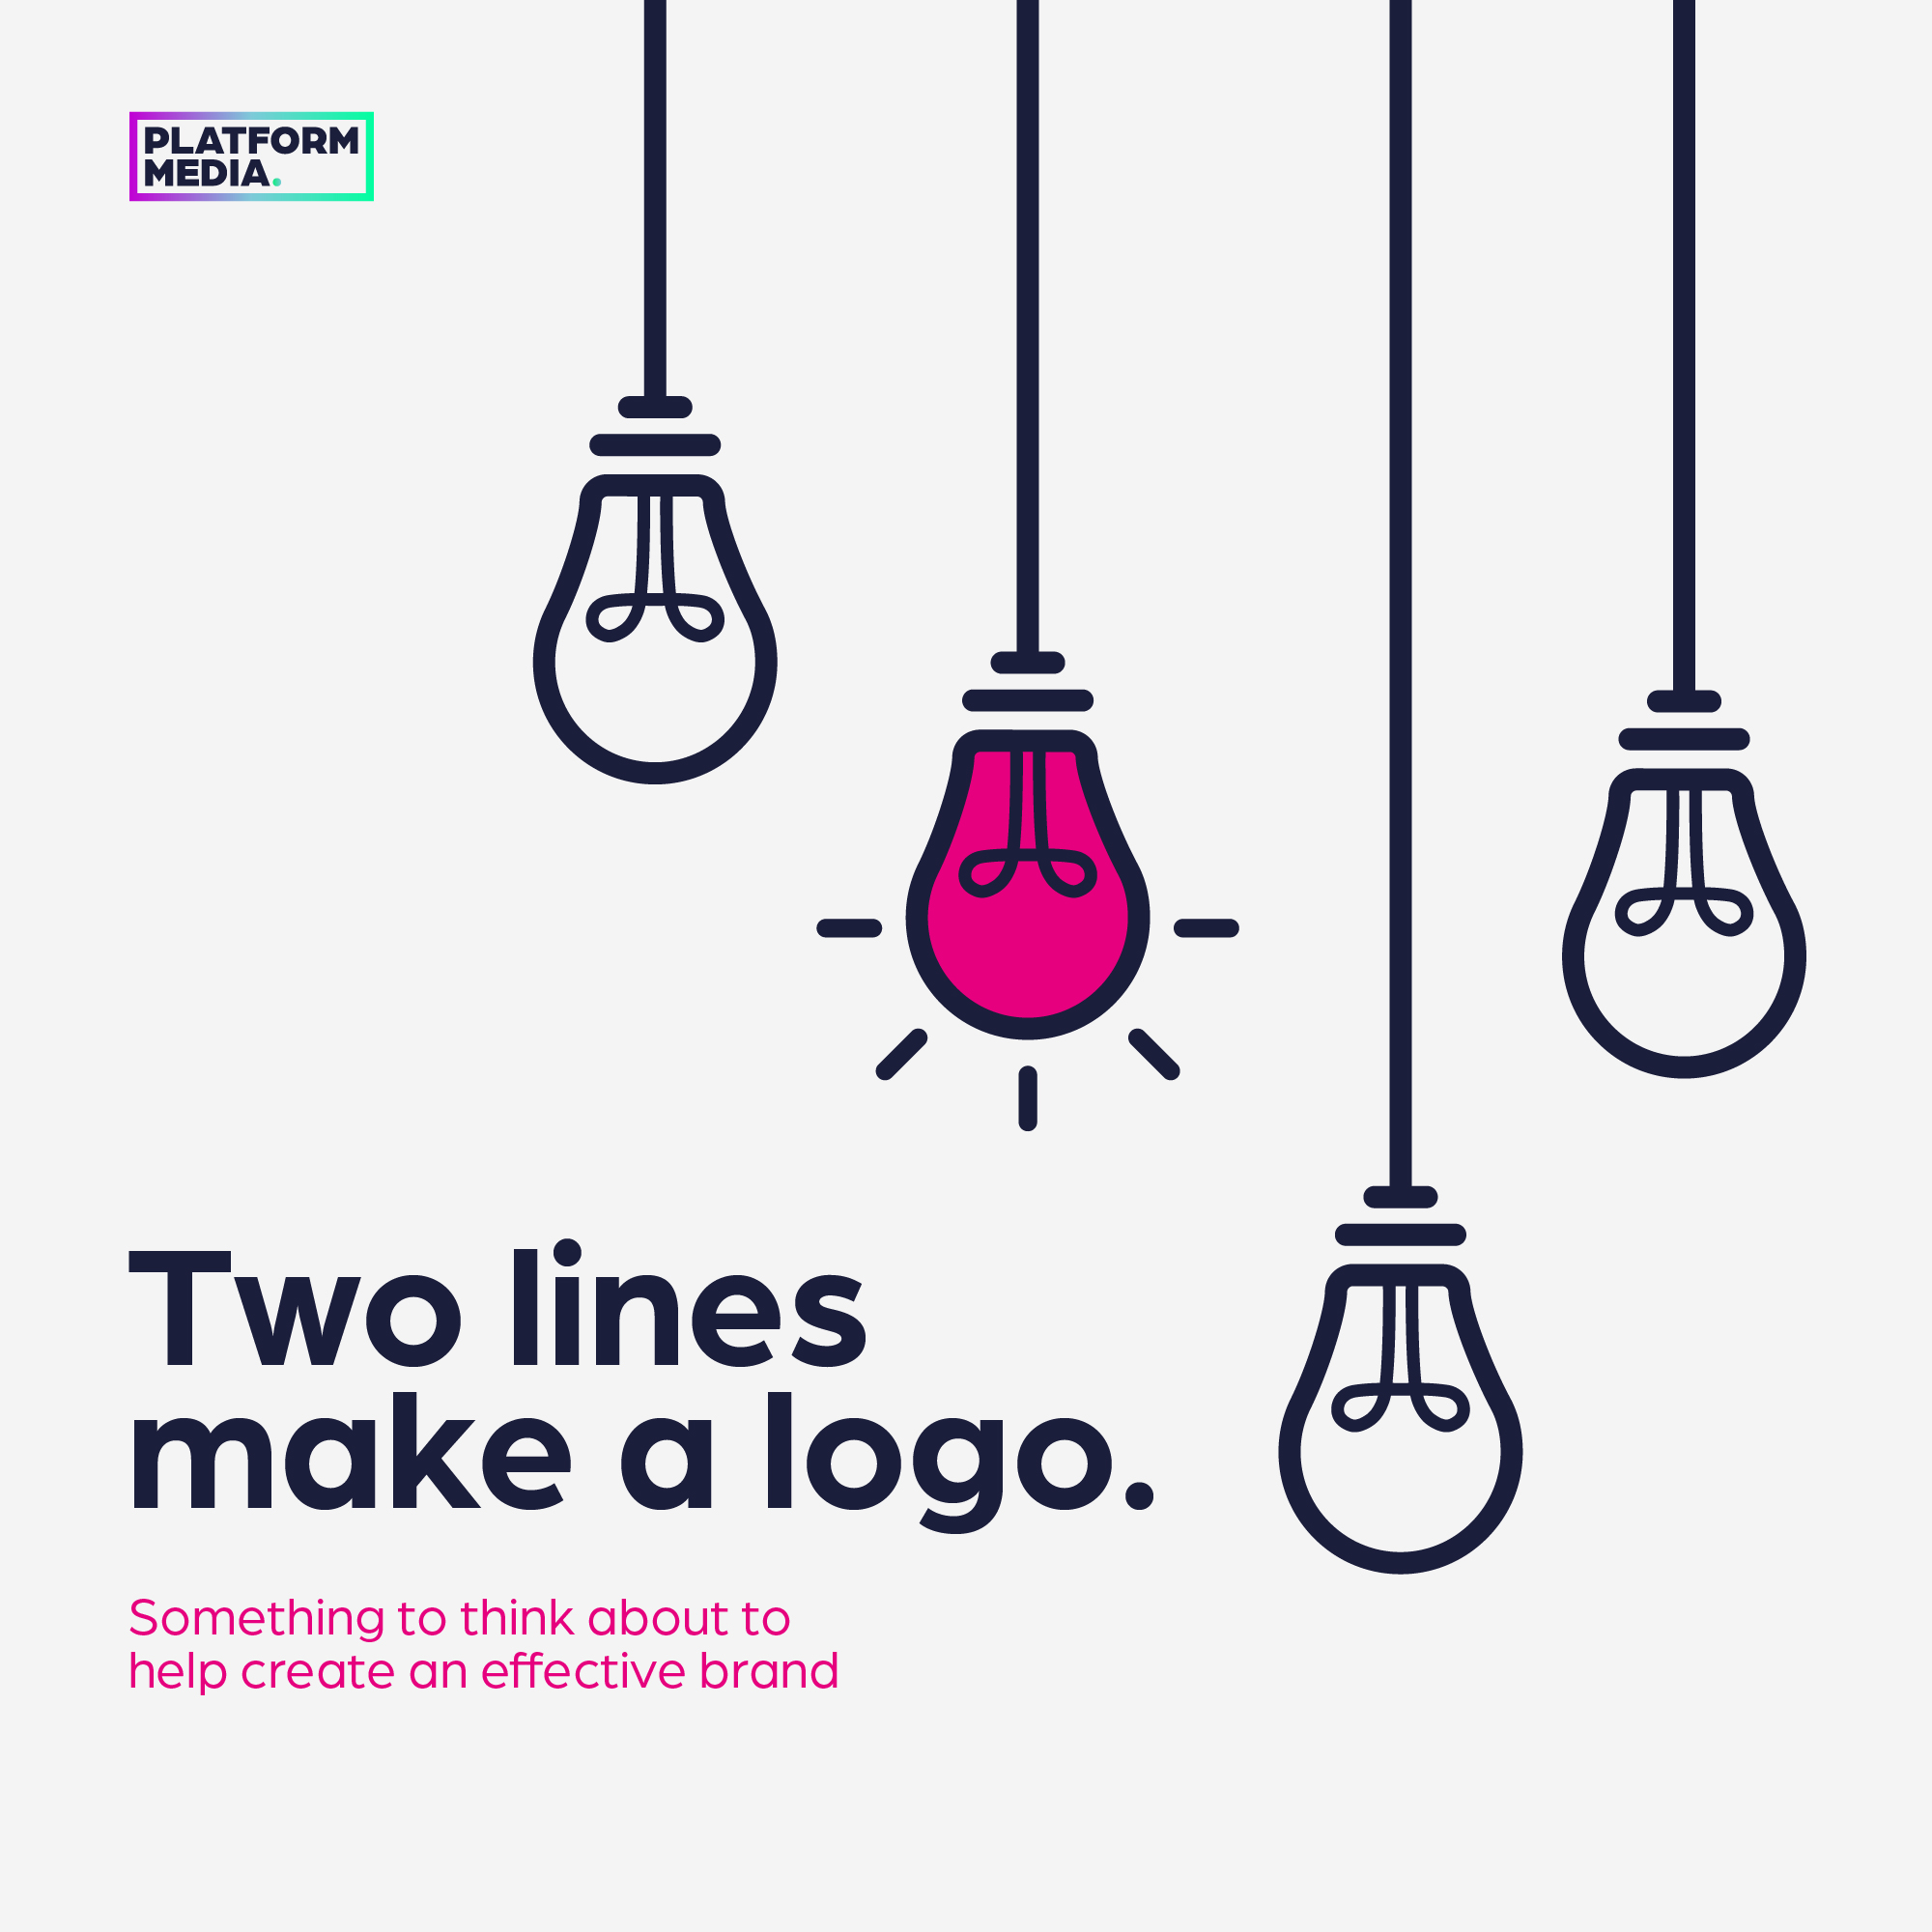 Two lines make a logo